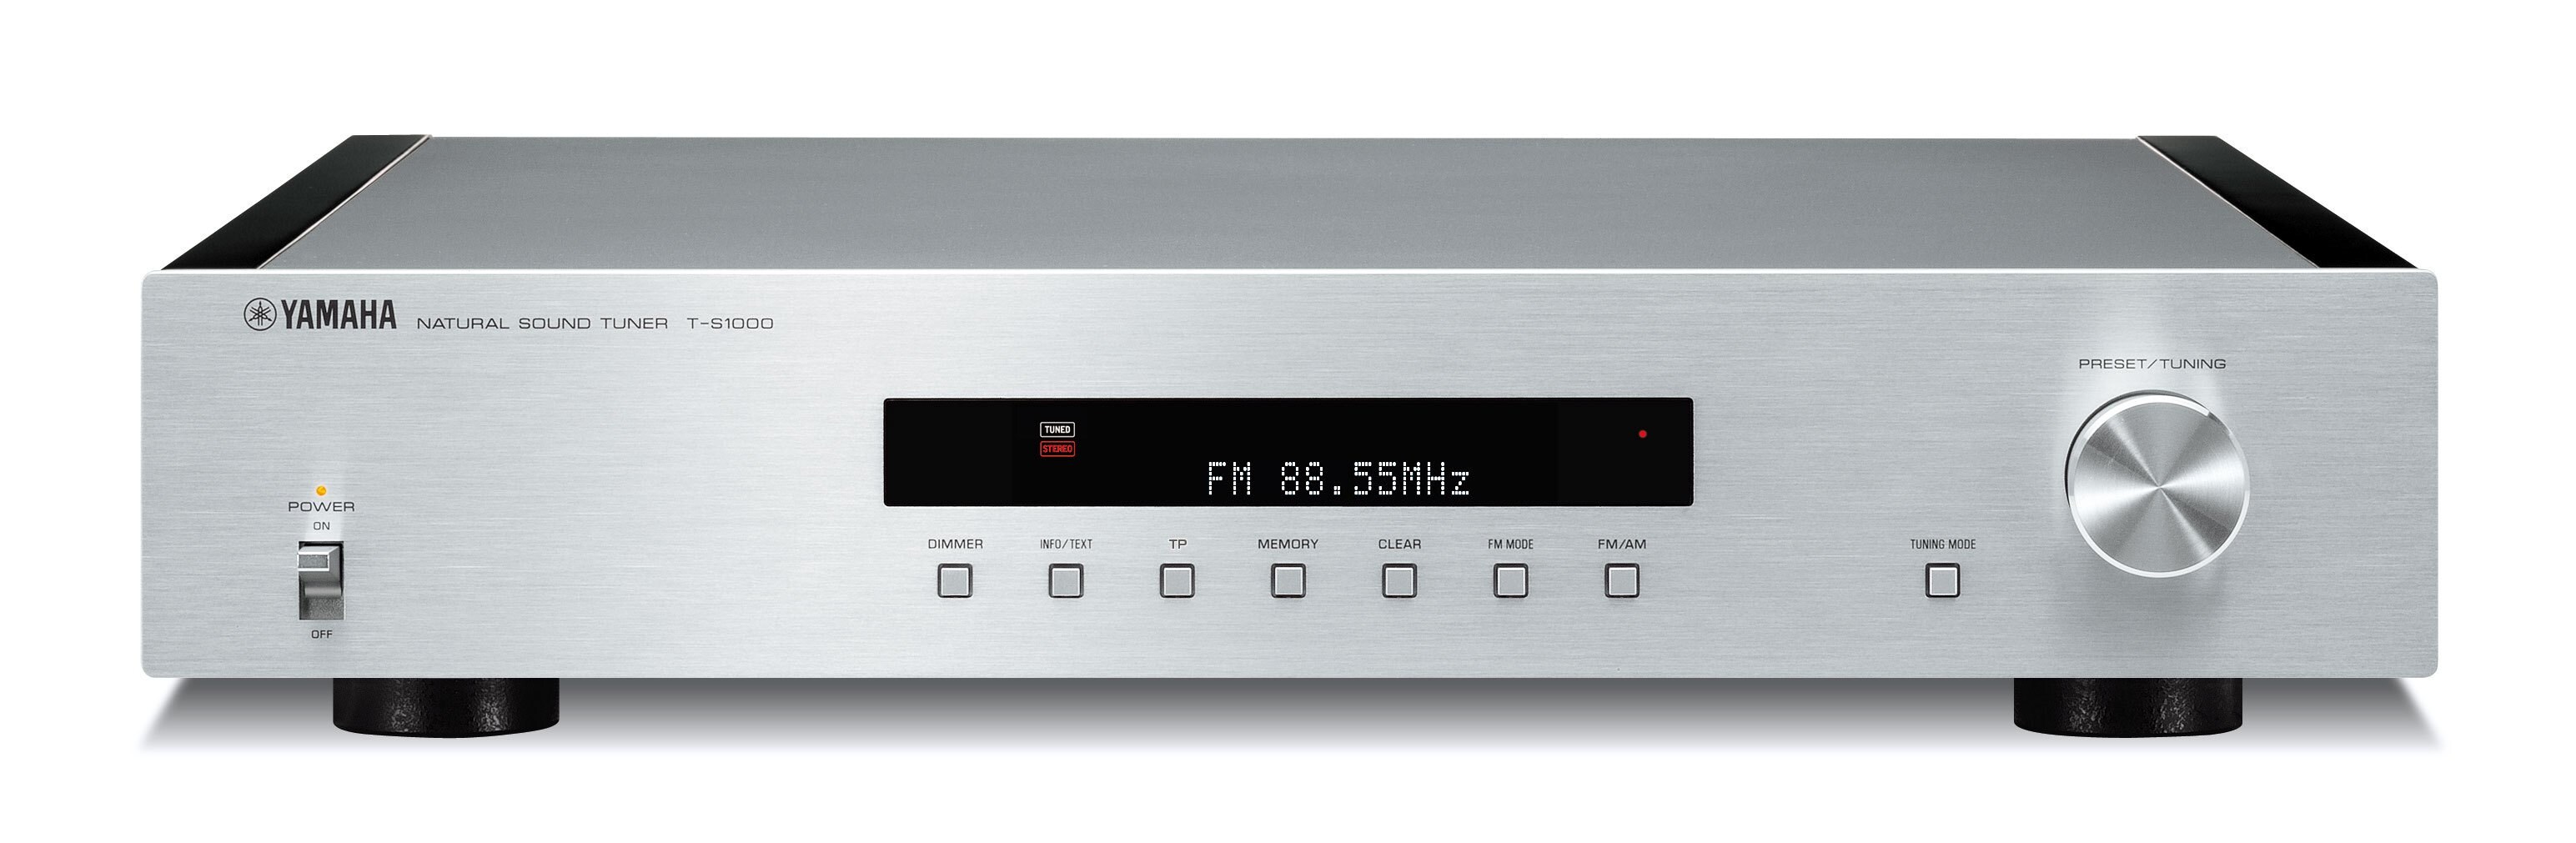 CD-S1000 - Overview - Hi-Fi Components - Audio & Visual - Products - Yamaha  USA